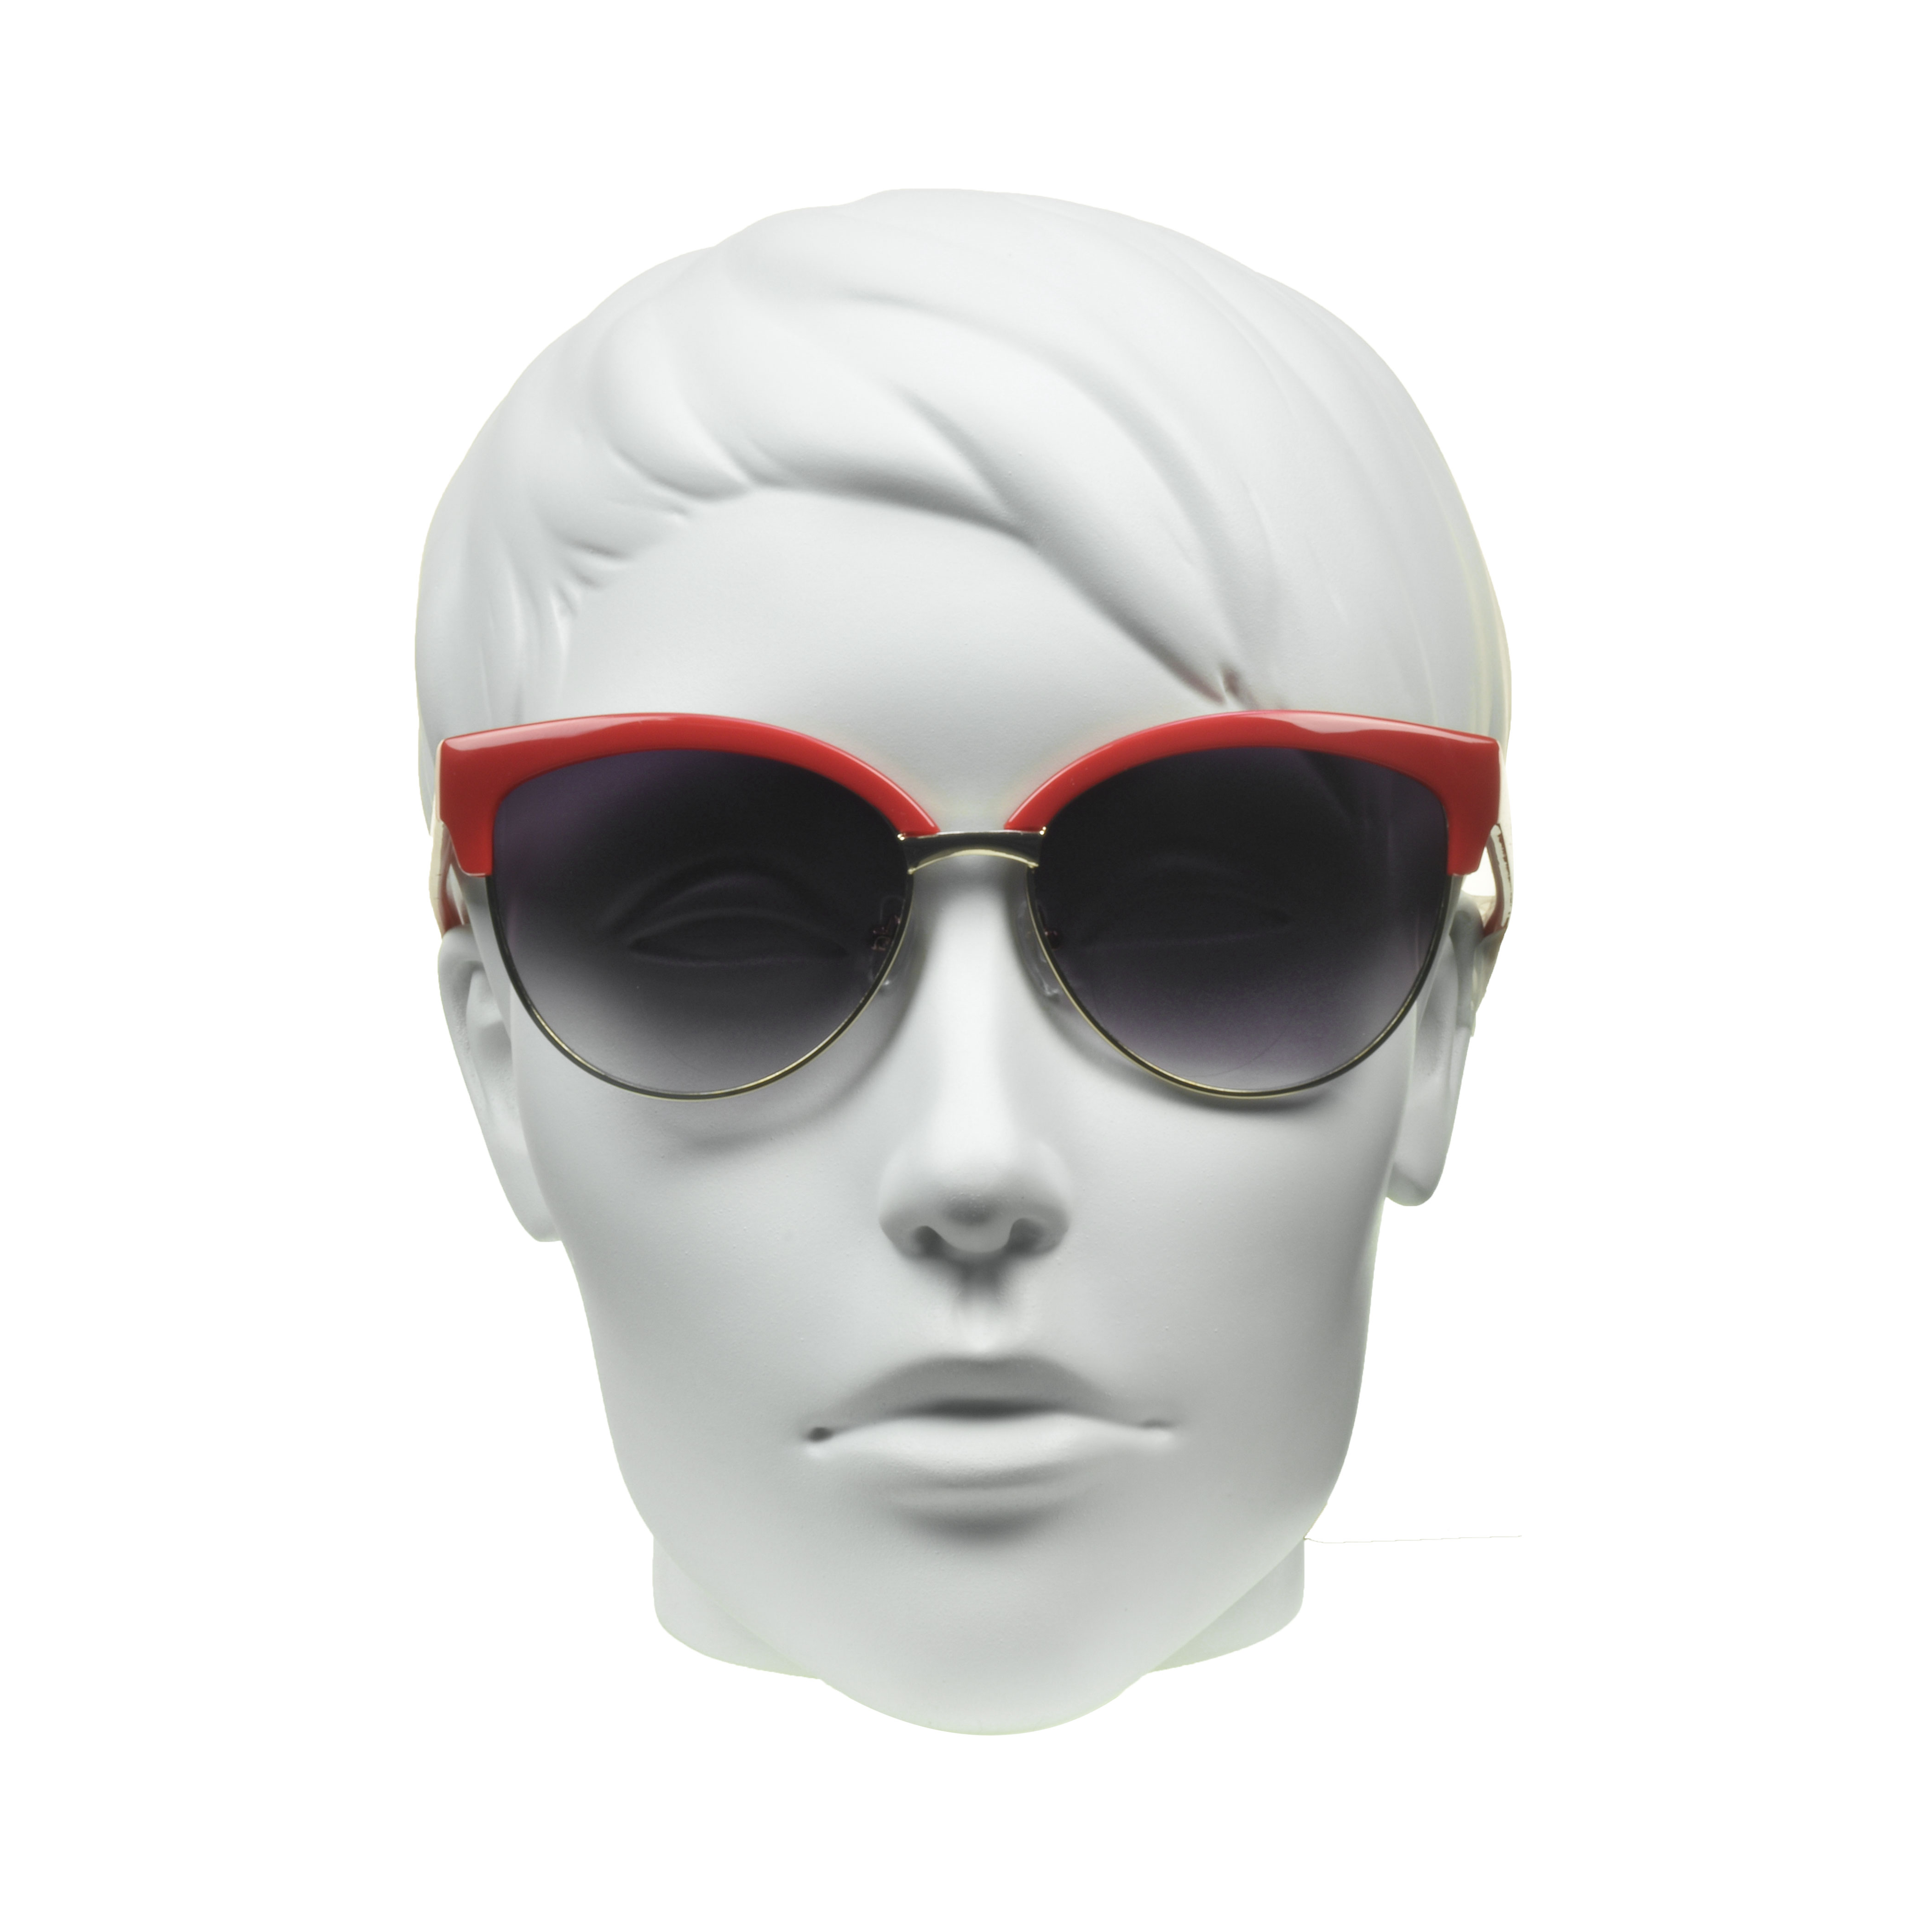 proSPORT Women Bifocal Reading Cateye Fashion Horn Rim Sunglasses Red Gold Frame Smoke Lens +1.00 - image 3 of 5